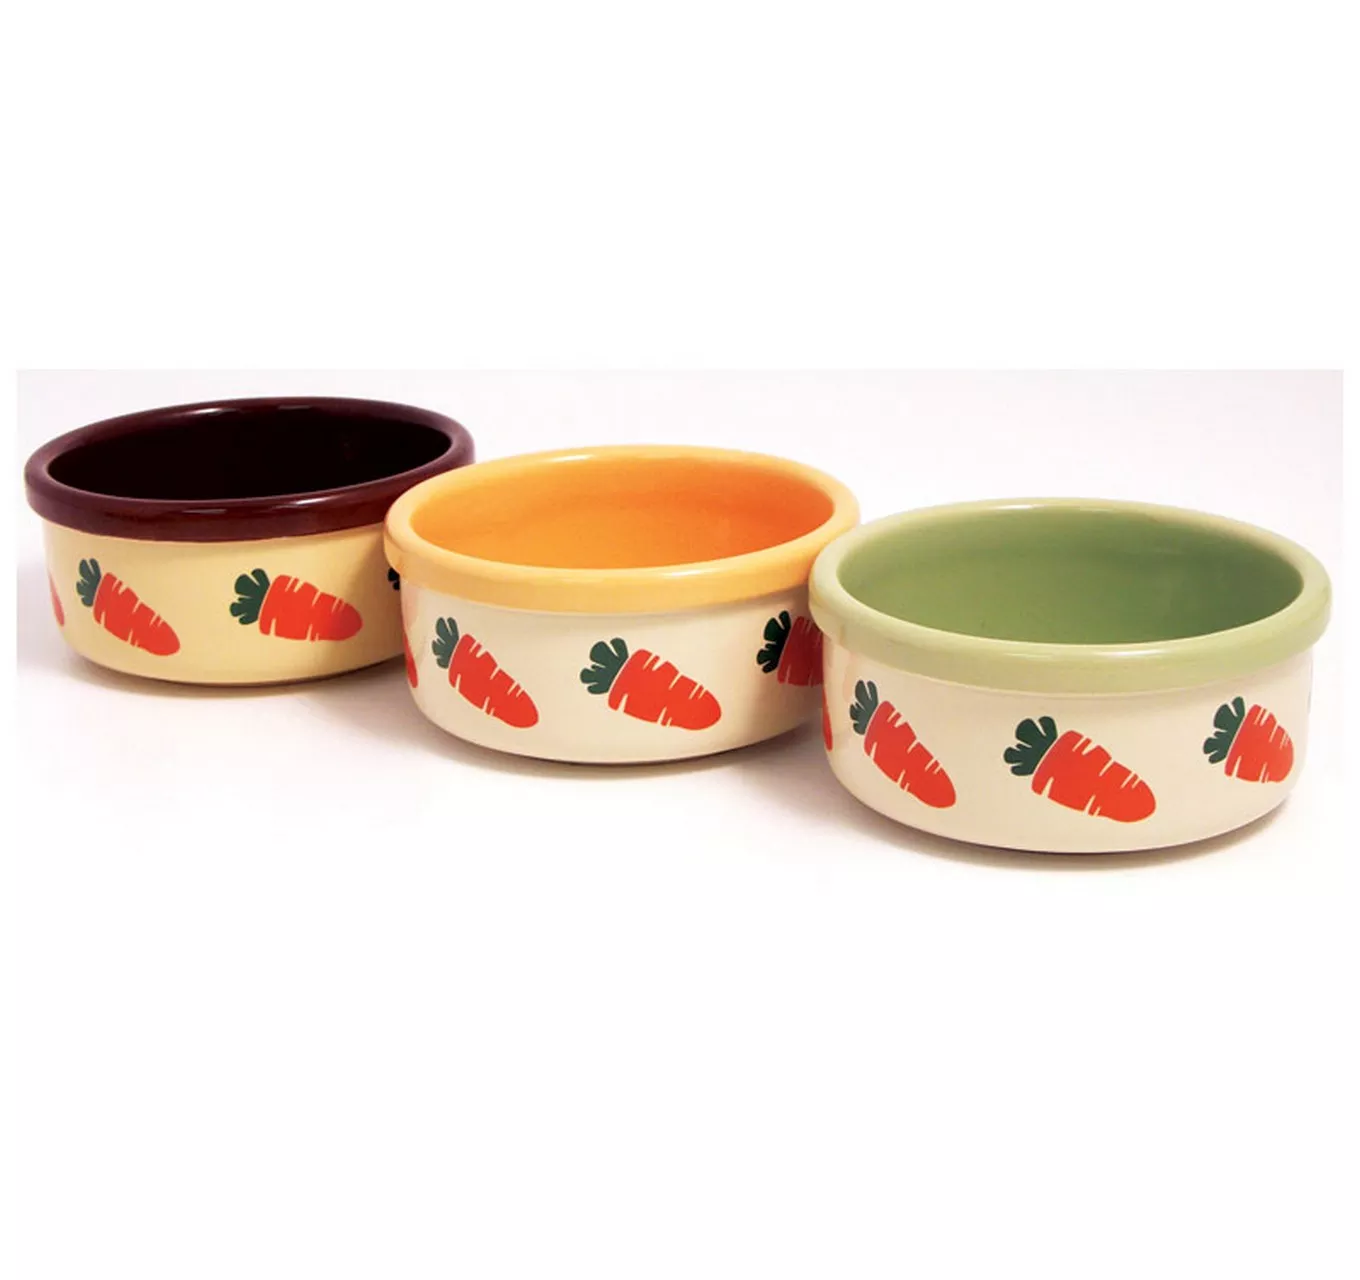 Ceramic Carrot Bowl - Each